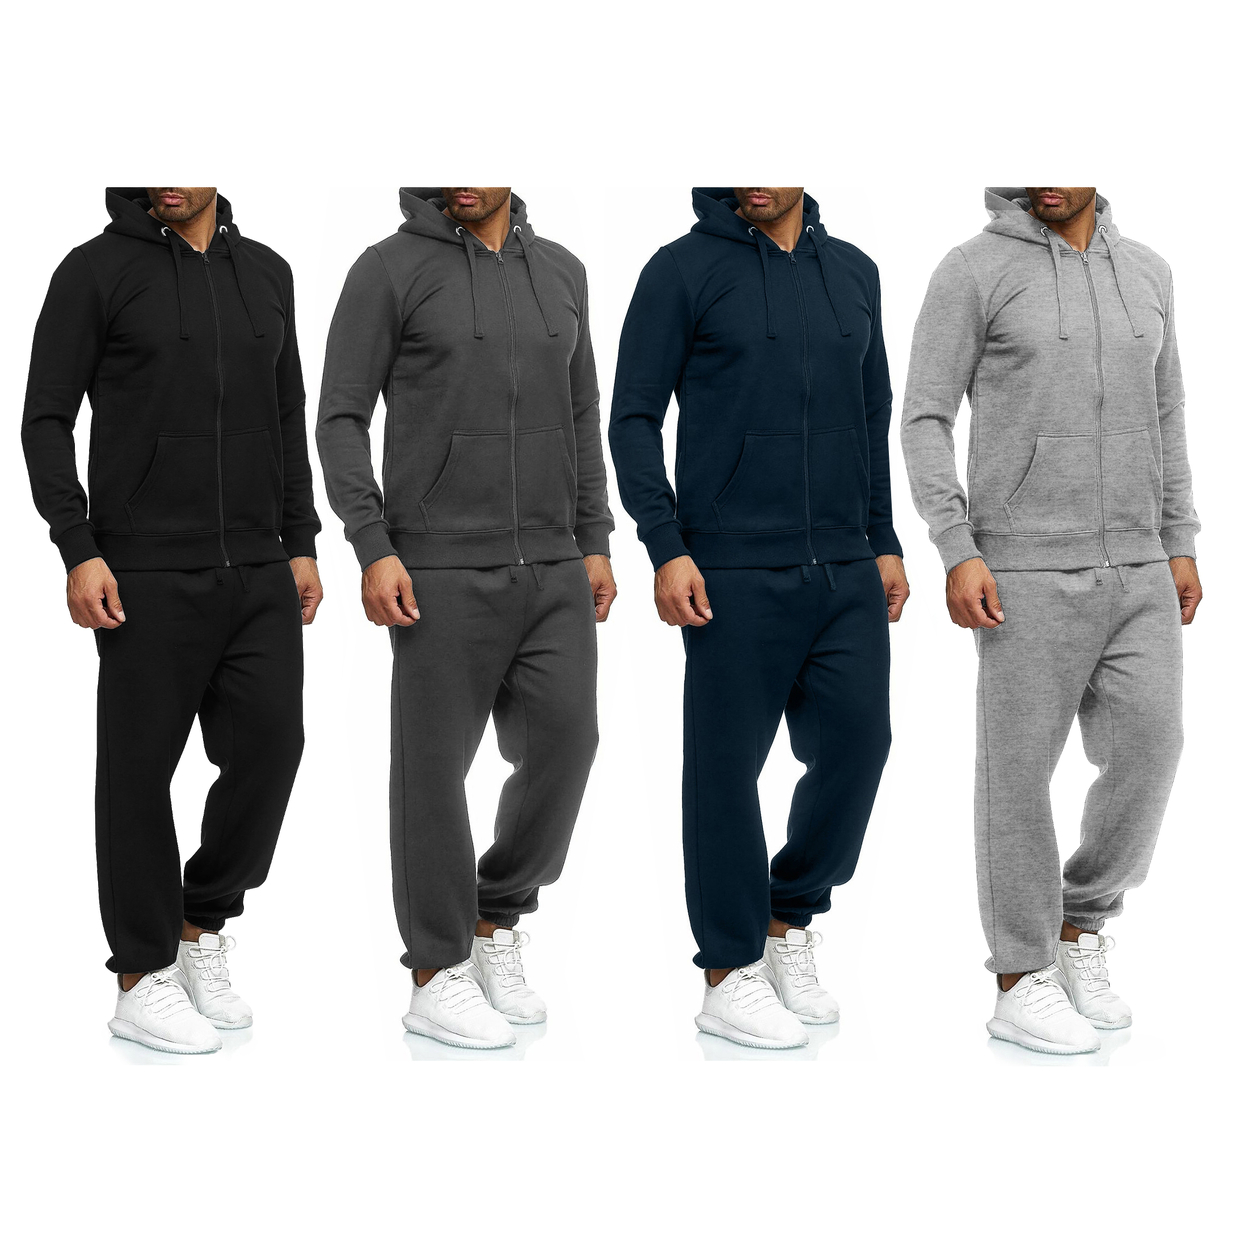 2/4-Piece: Men's Winter Warm Cozy Athletic Multi-Pockets BIG & TALL Sweatsuit Set - Navy, 1, X-large